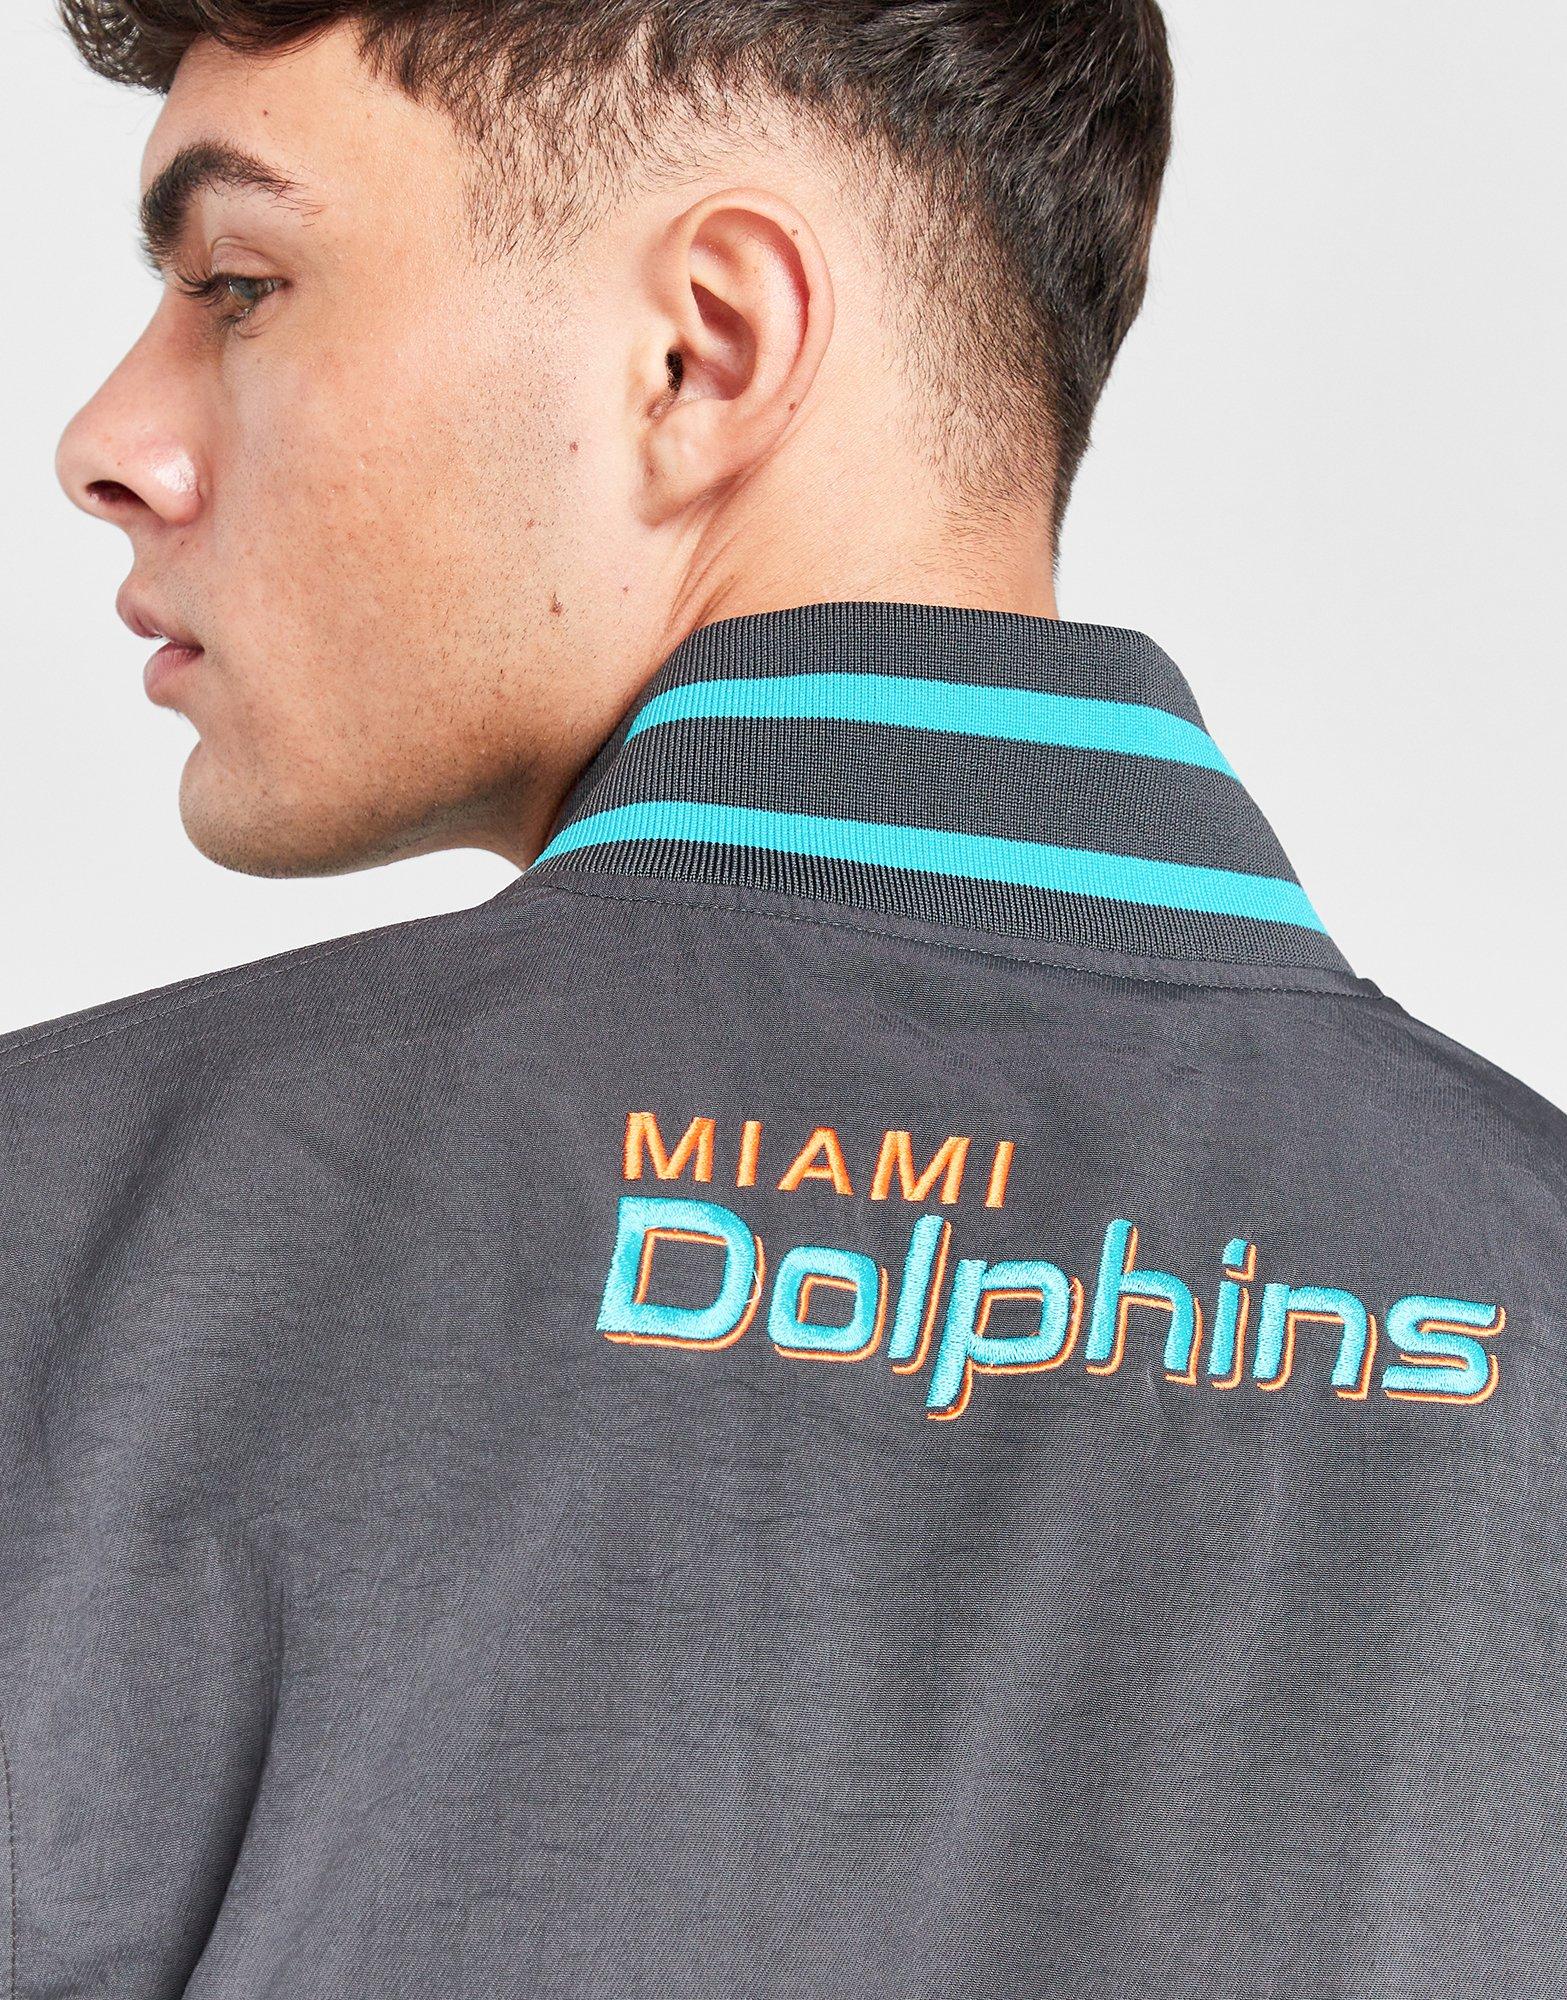 Tommy Hilfiger NFL Miami Dolphins Polo Shirt Size XLarge NWT (J2)